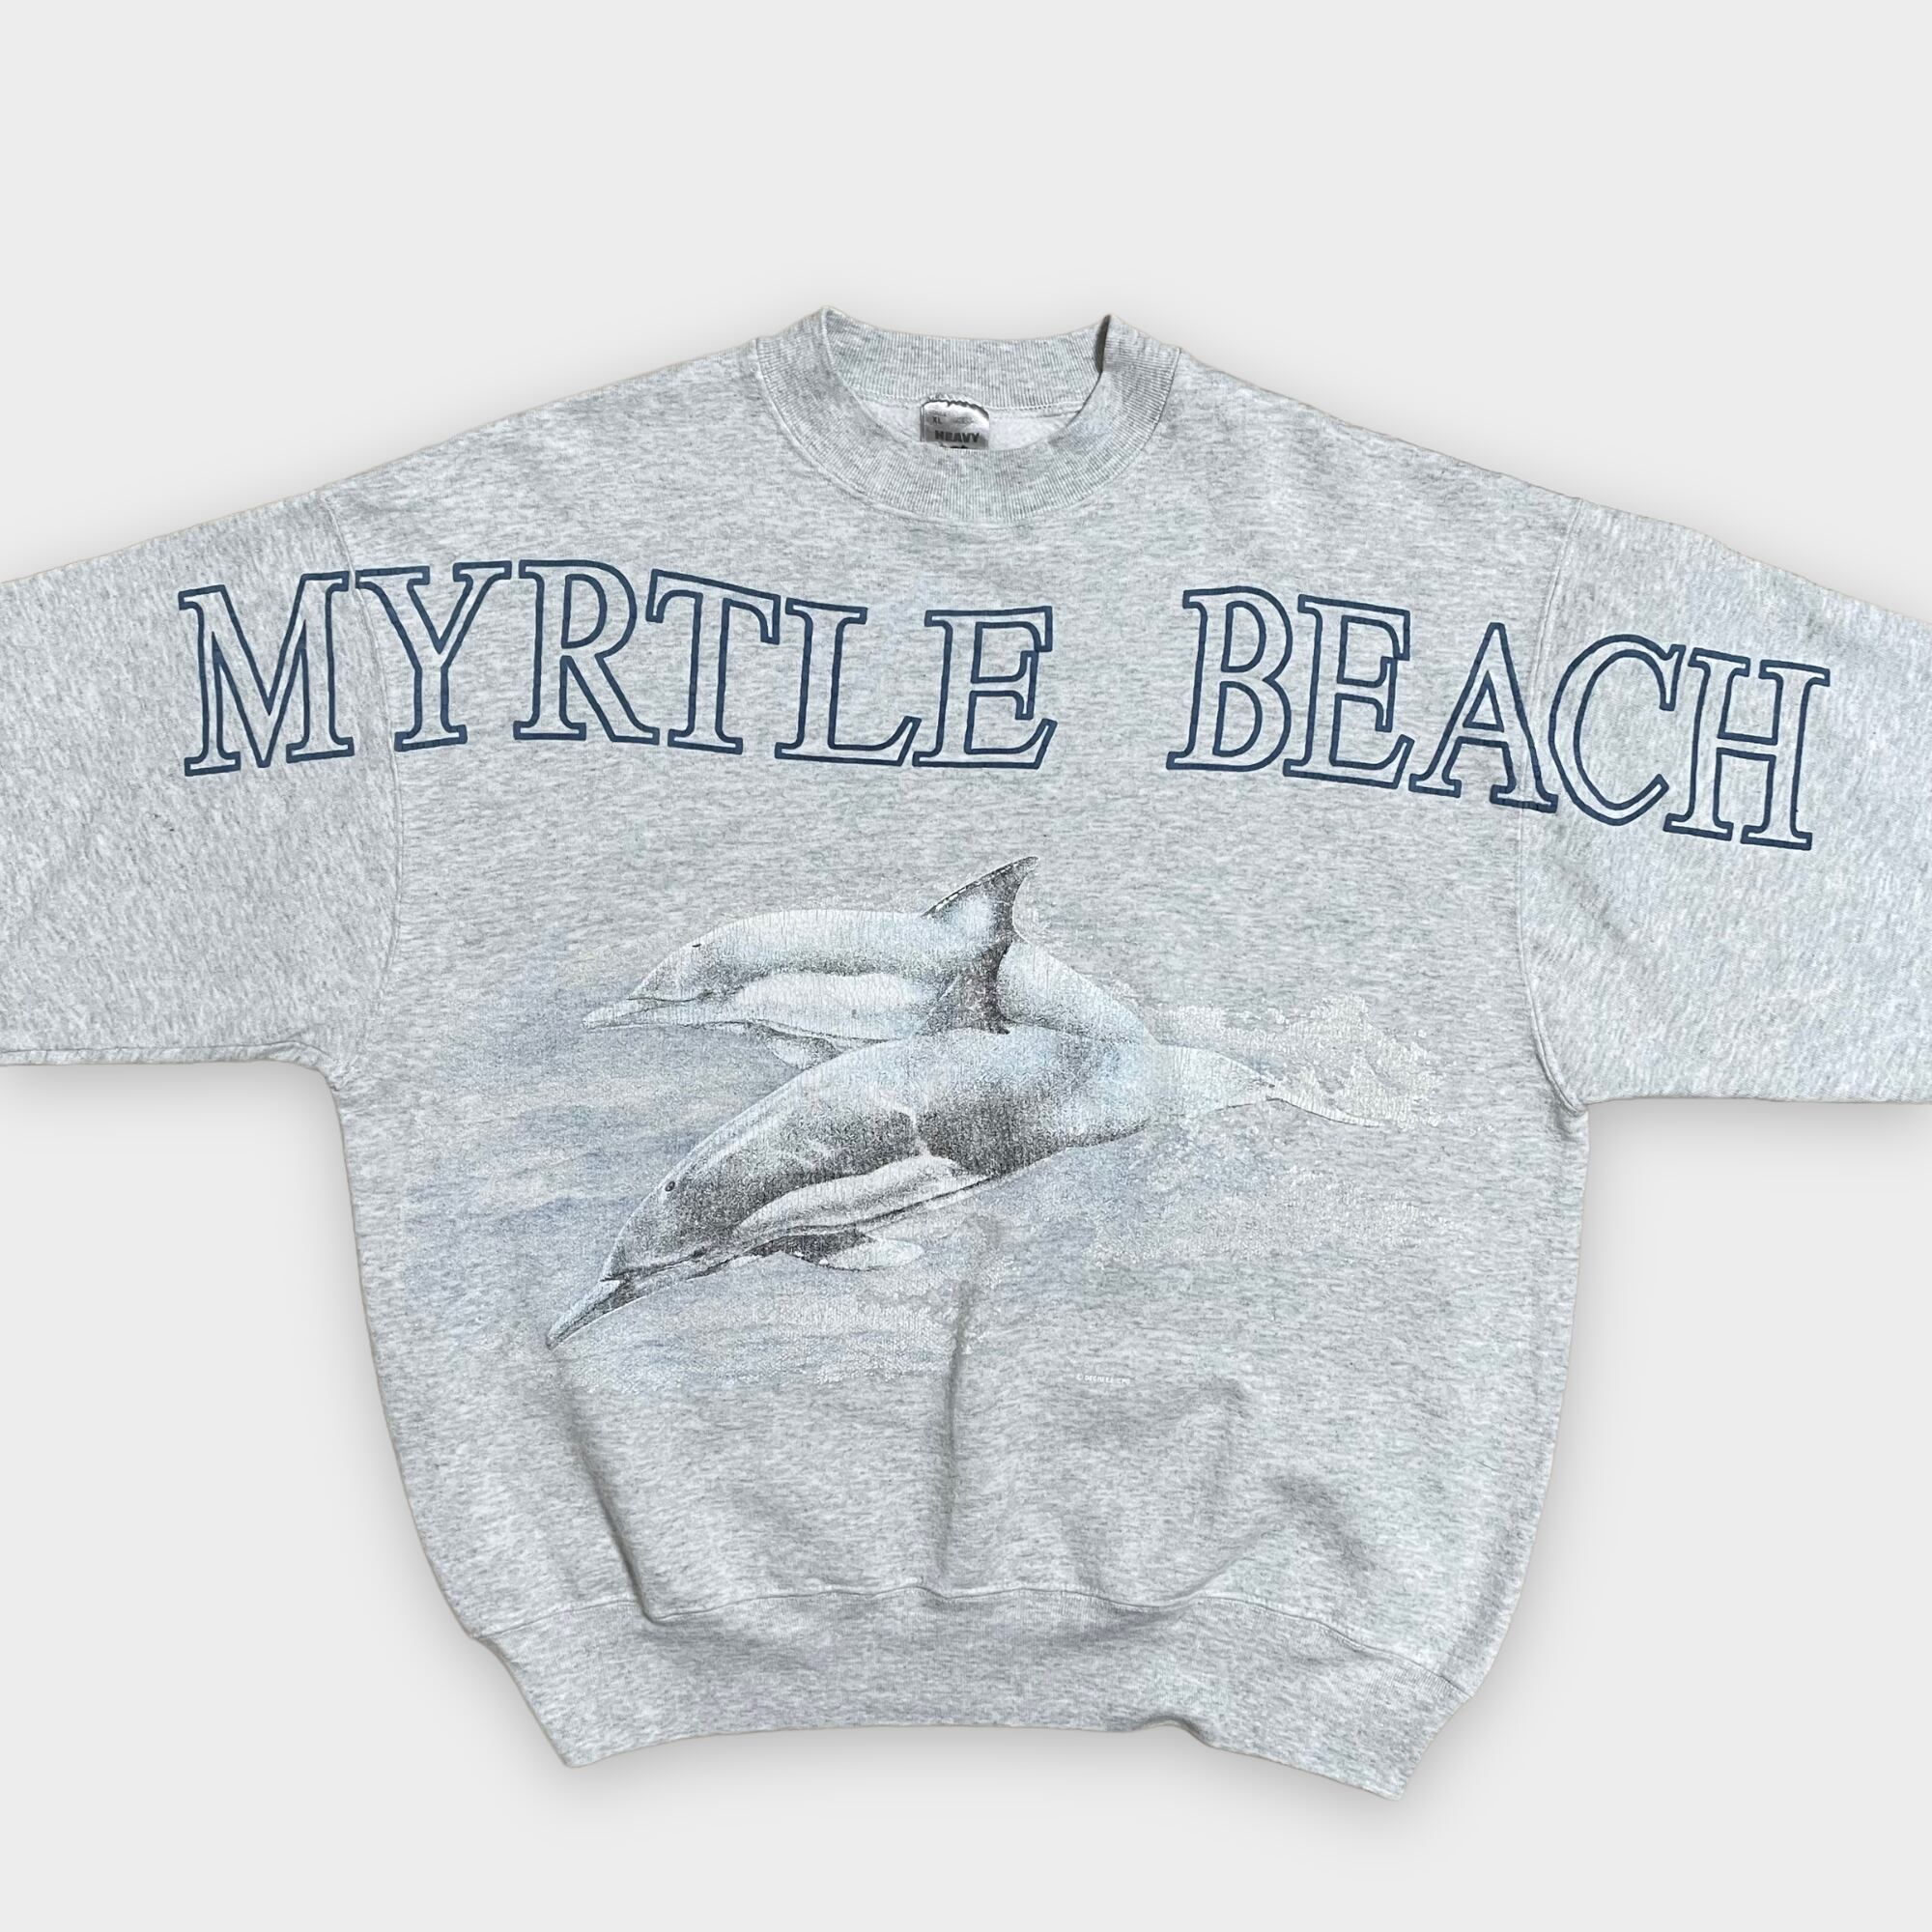 MYRTLE BEACH 刺繍 デカロゴ ビーチ スウェット - トップス